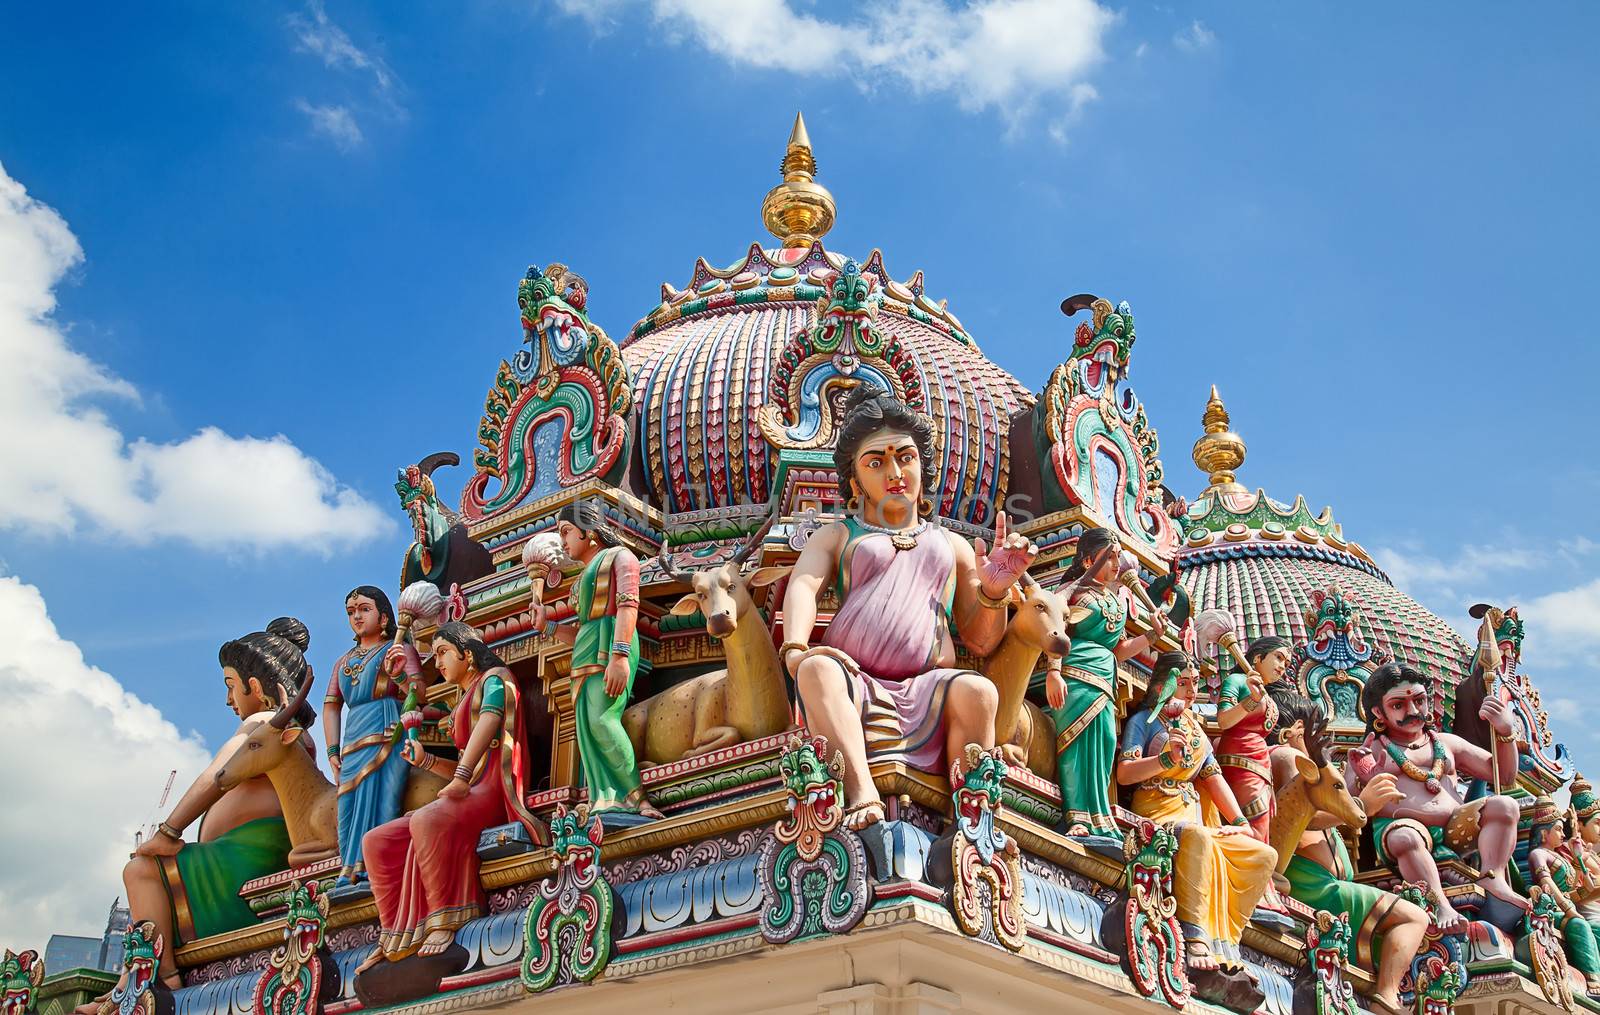 Hindu temple by swisshippo